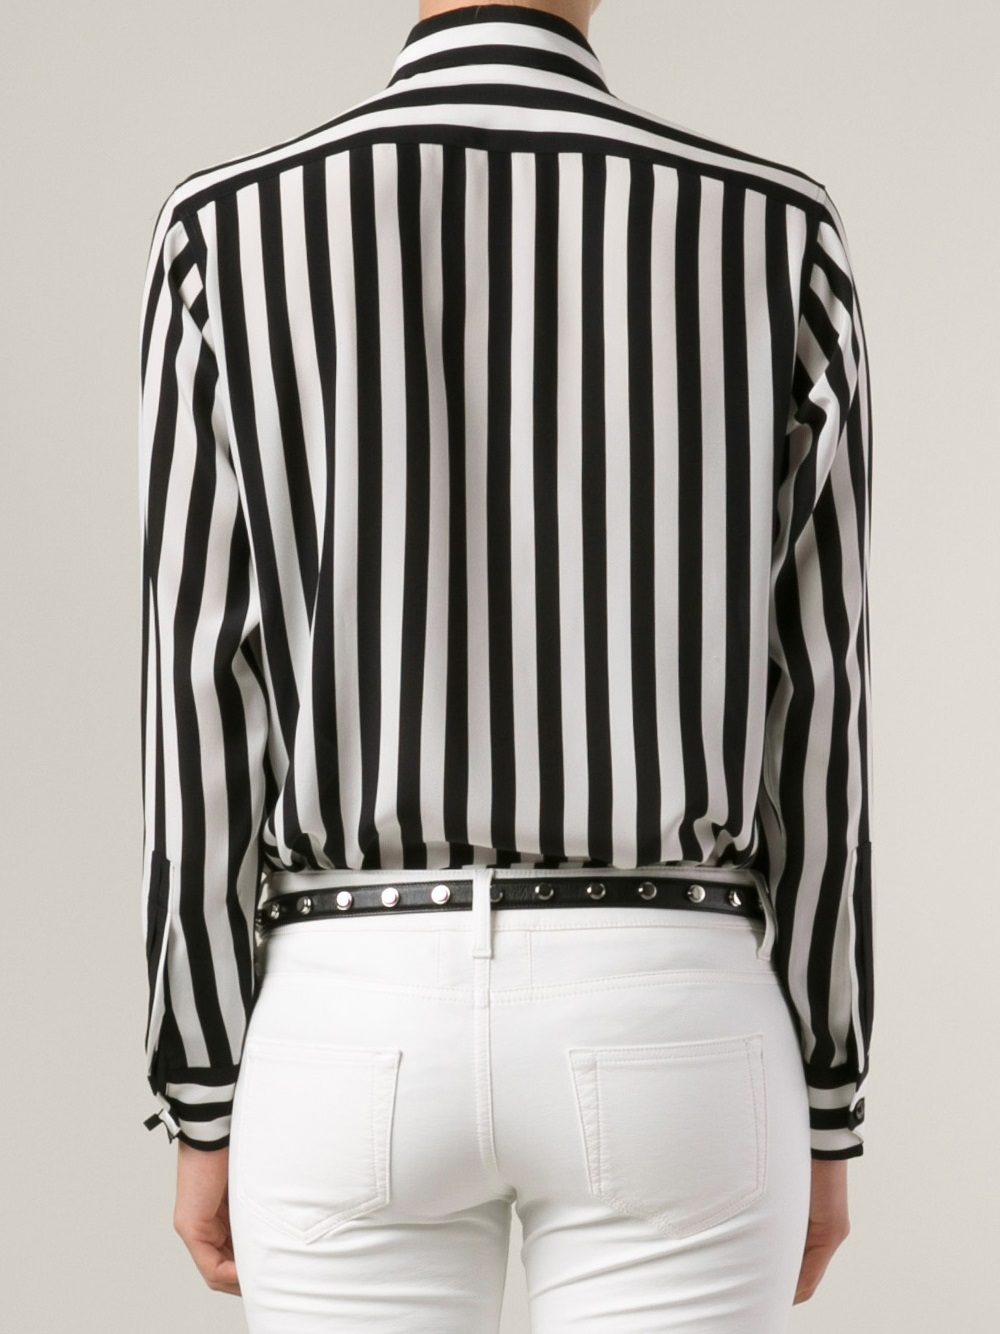 Saint Laurent Striped Shirt in Black - Lyst